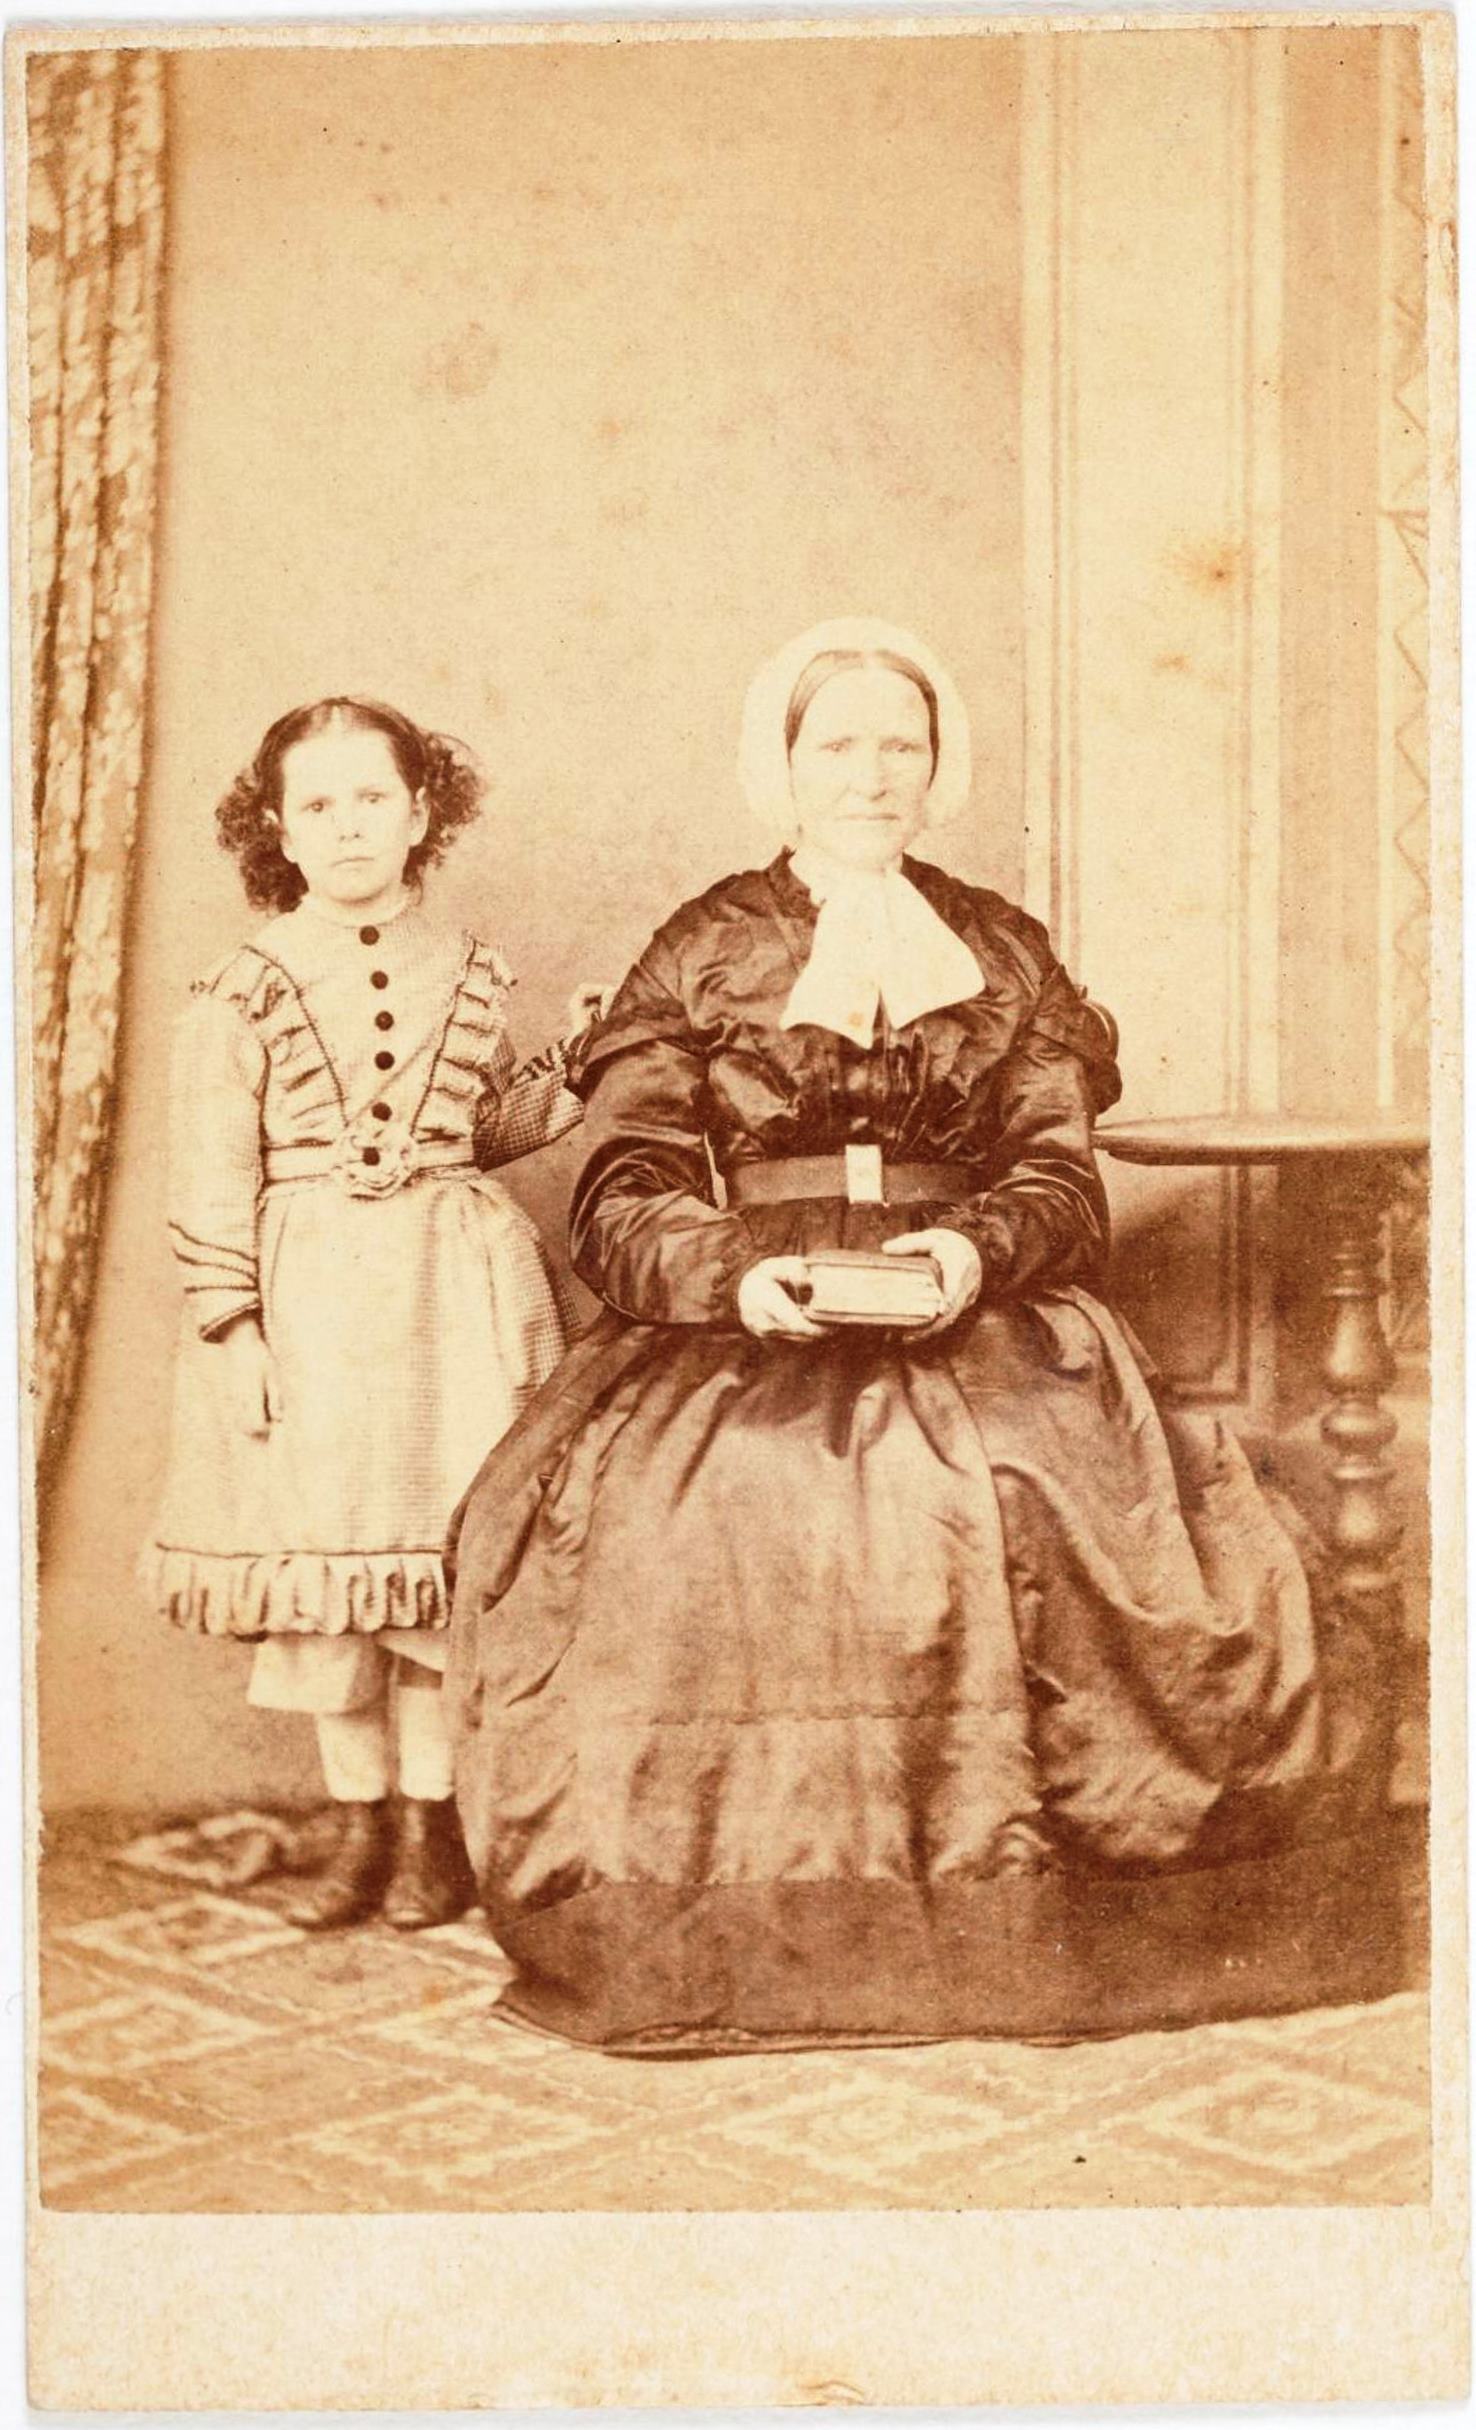 Tottie Thorburn with her grandmother Mary McKenzie, around 1874 / 
James Brothers, London Portrait Studio, Kiama